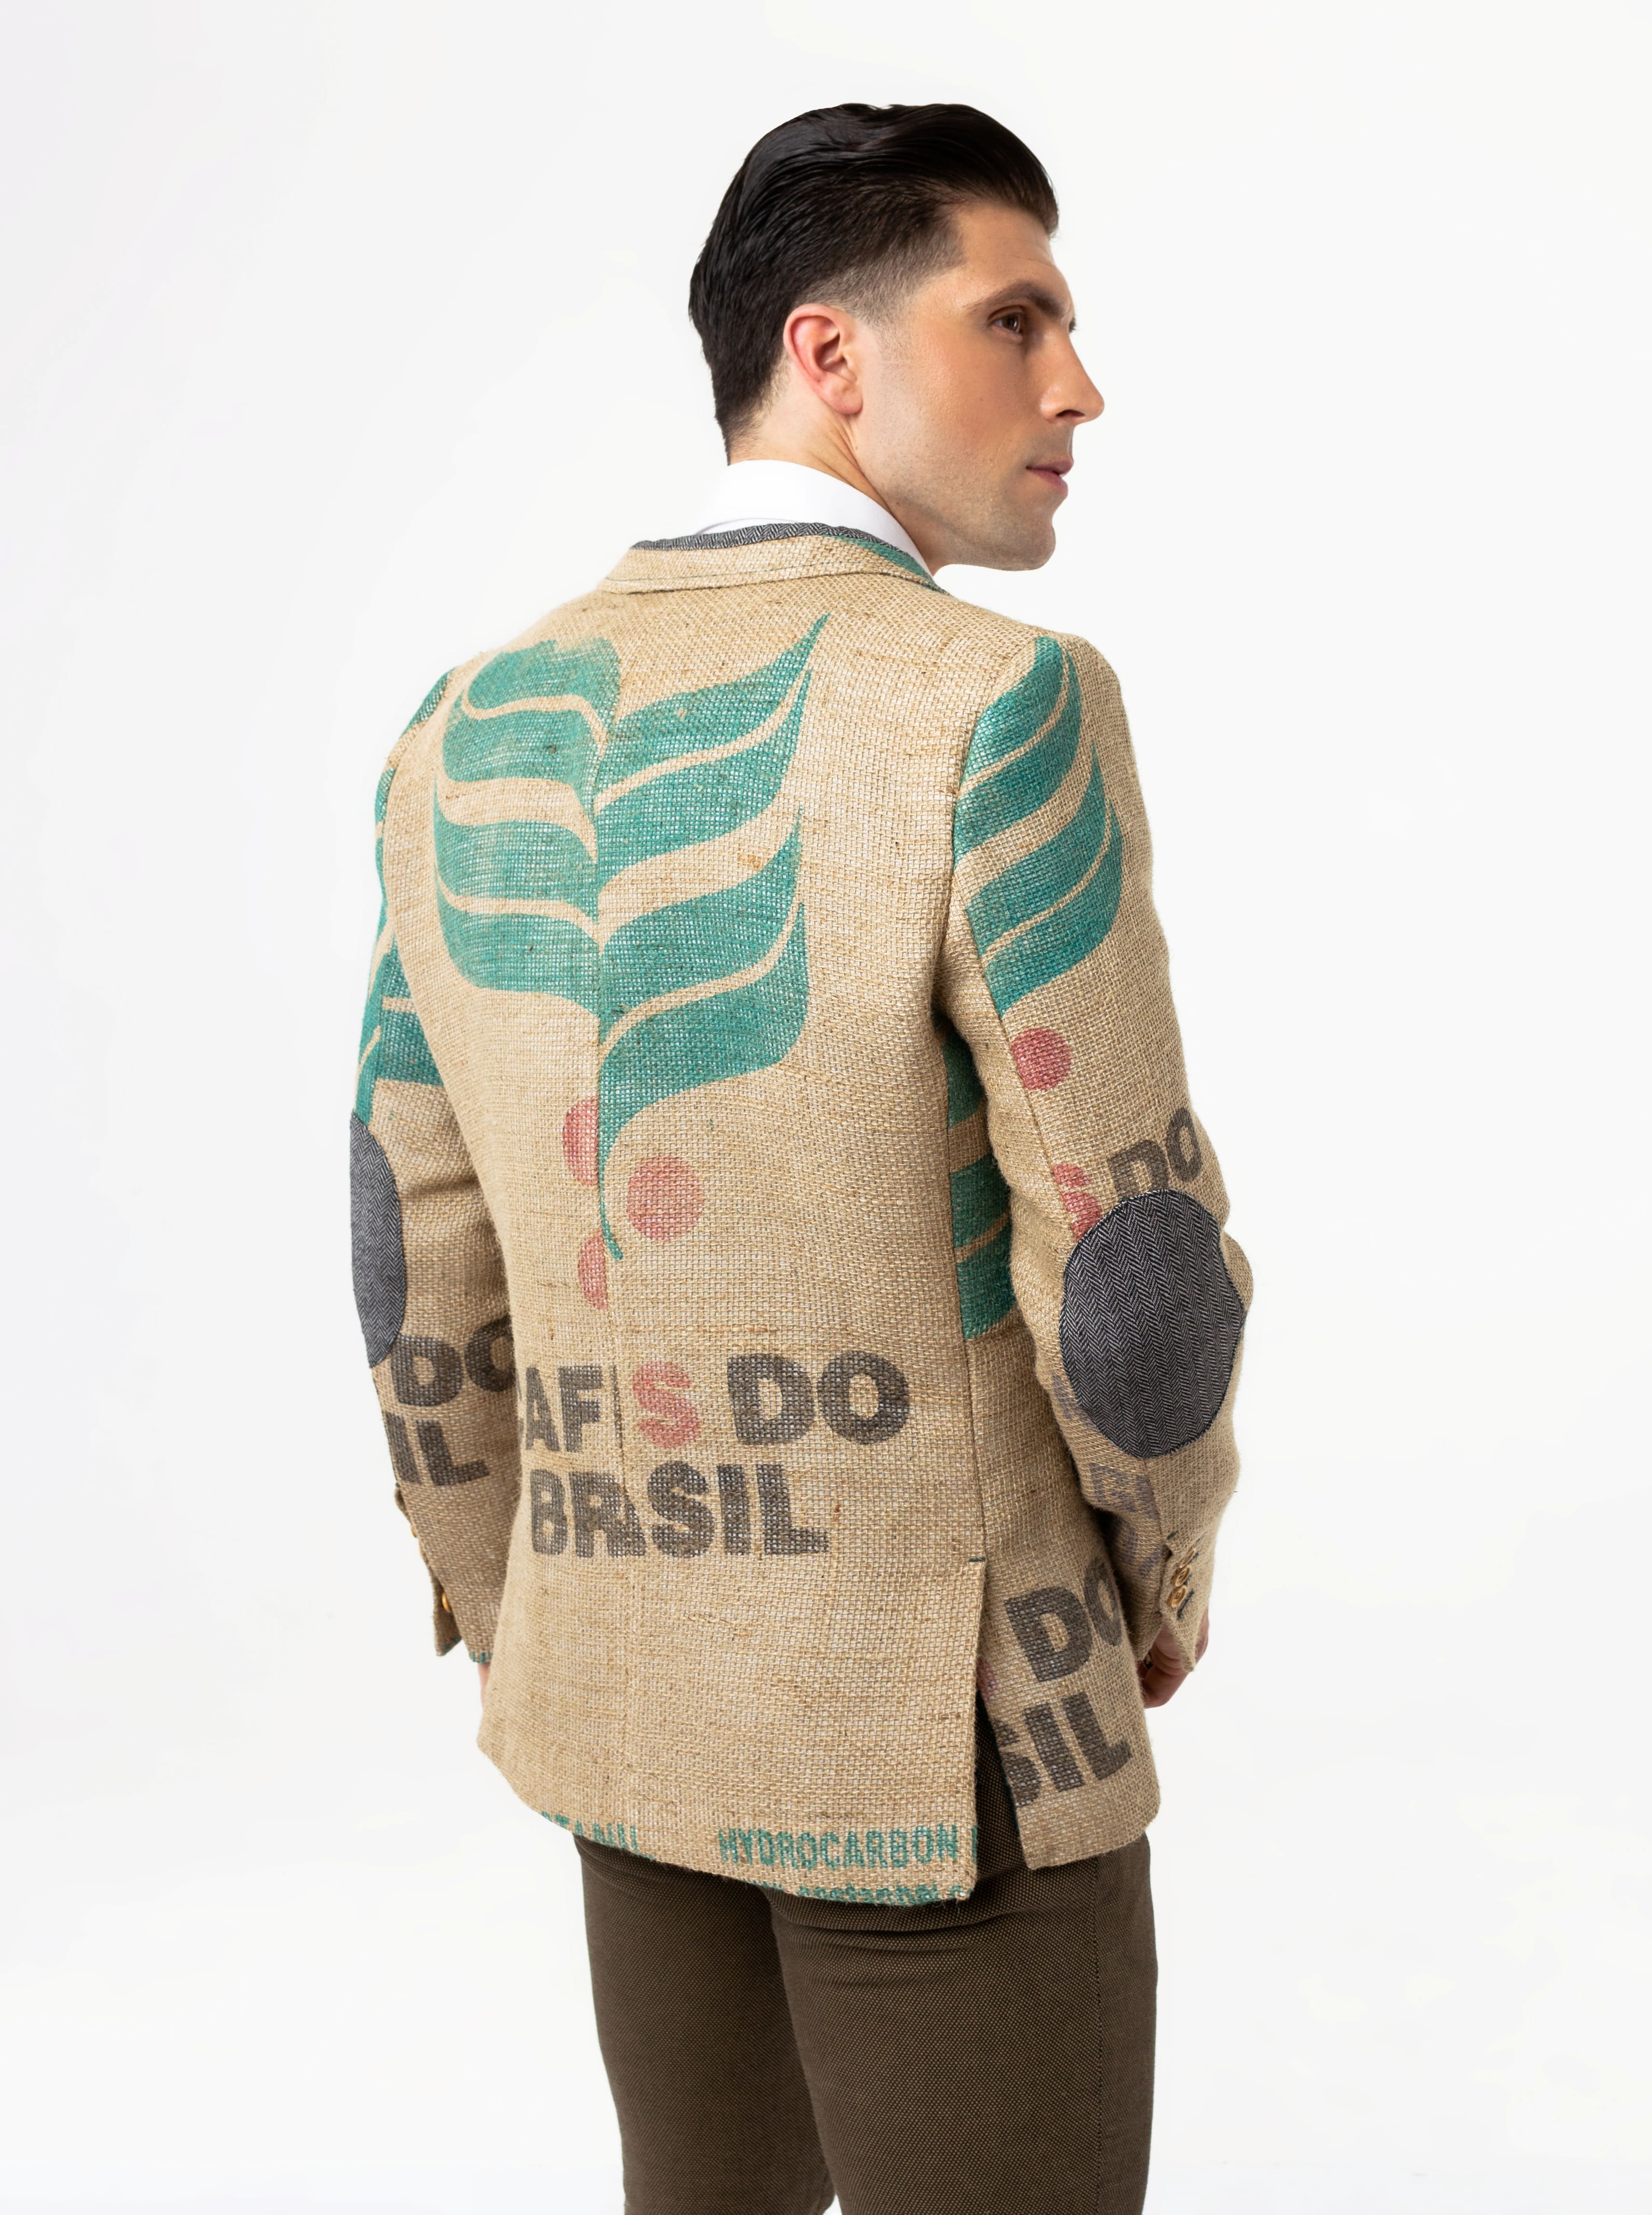 An elegant sustainable men`s blazer made from Brazilian coffee sacks